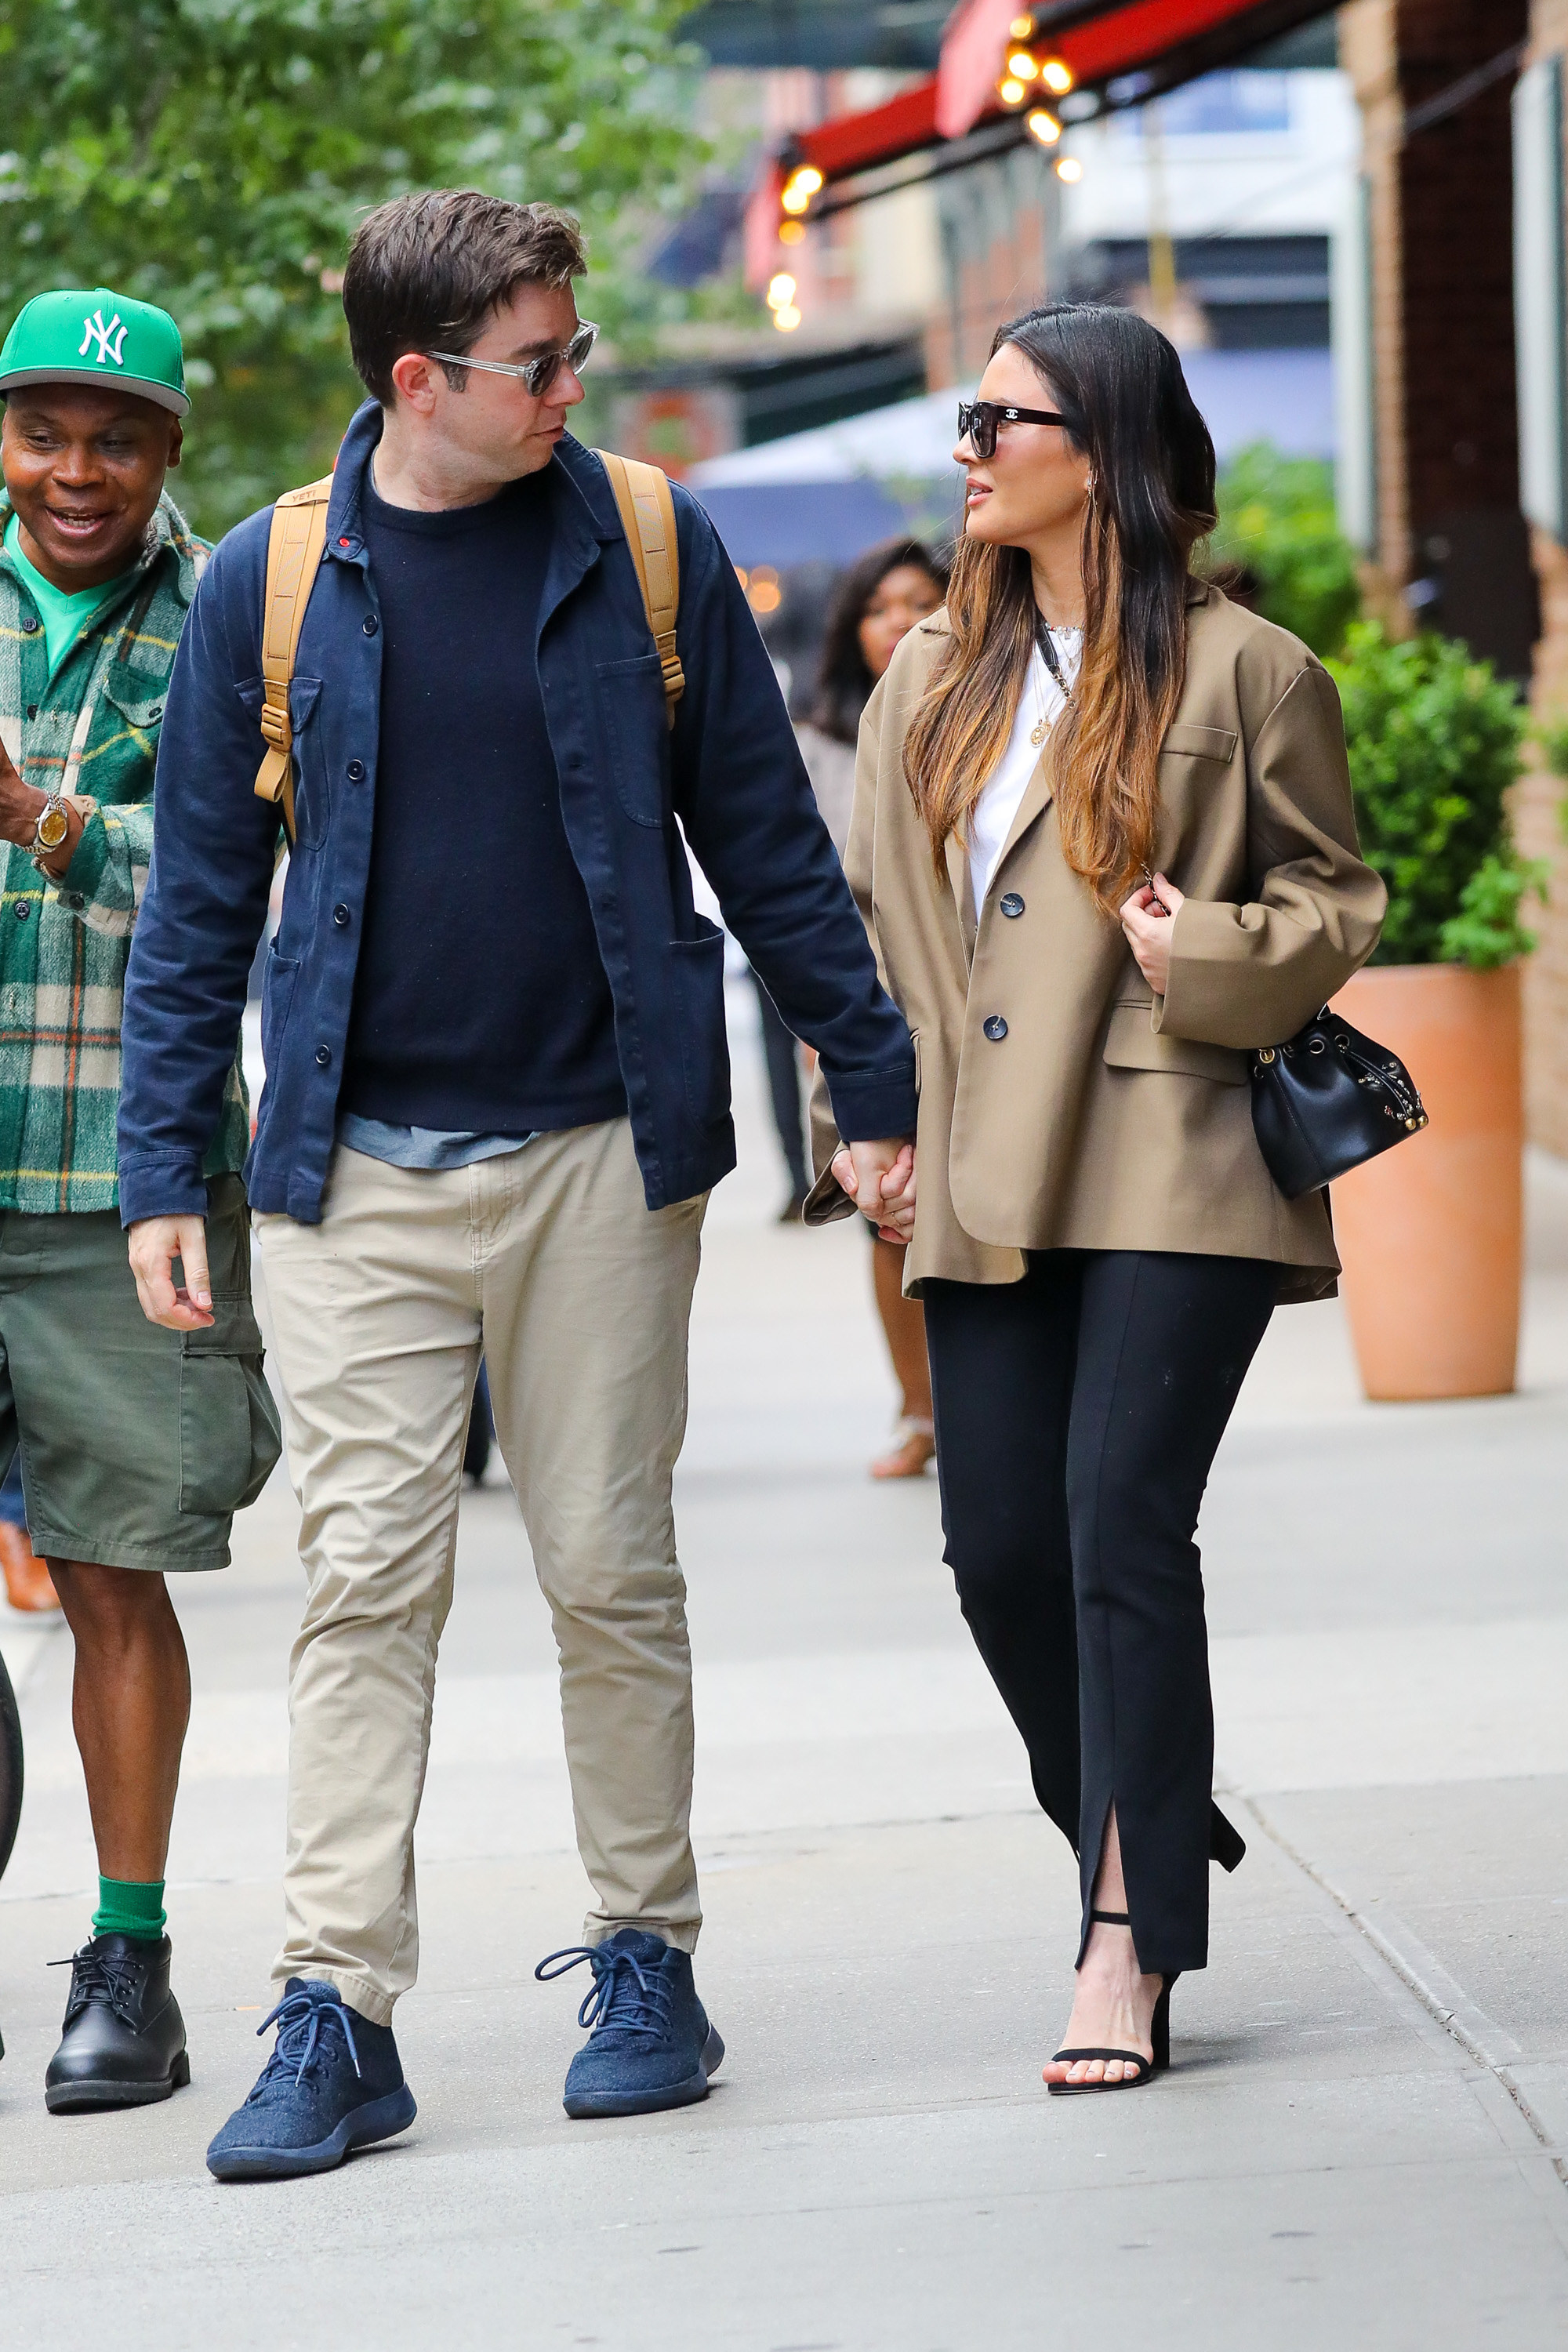 John and Olivia walking hand in hand